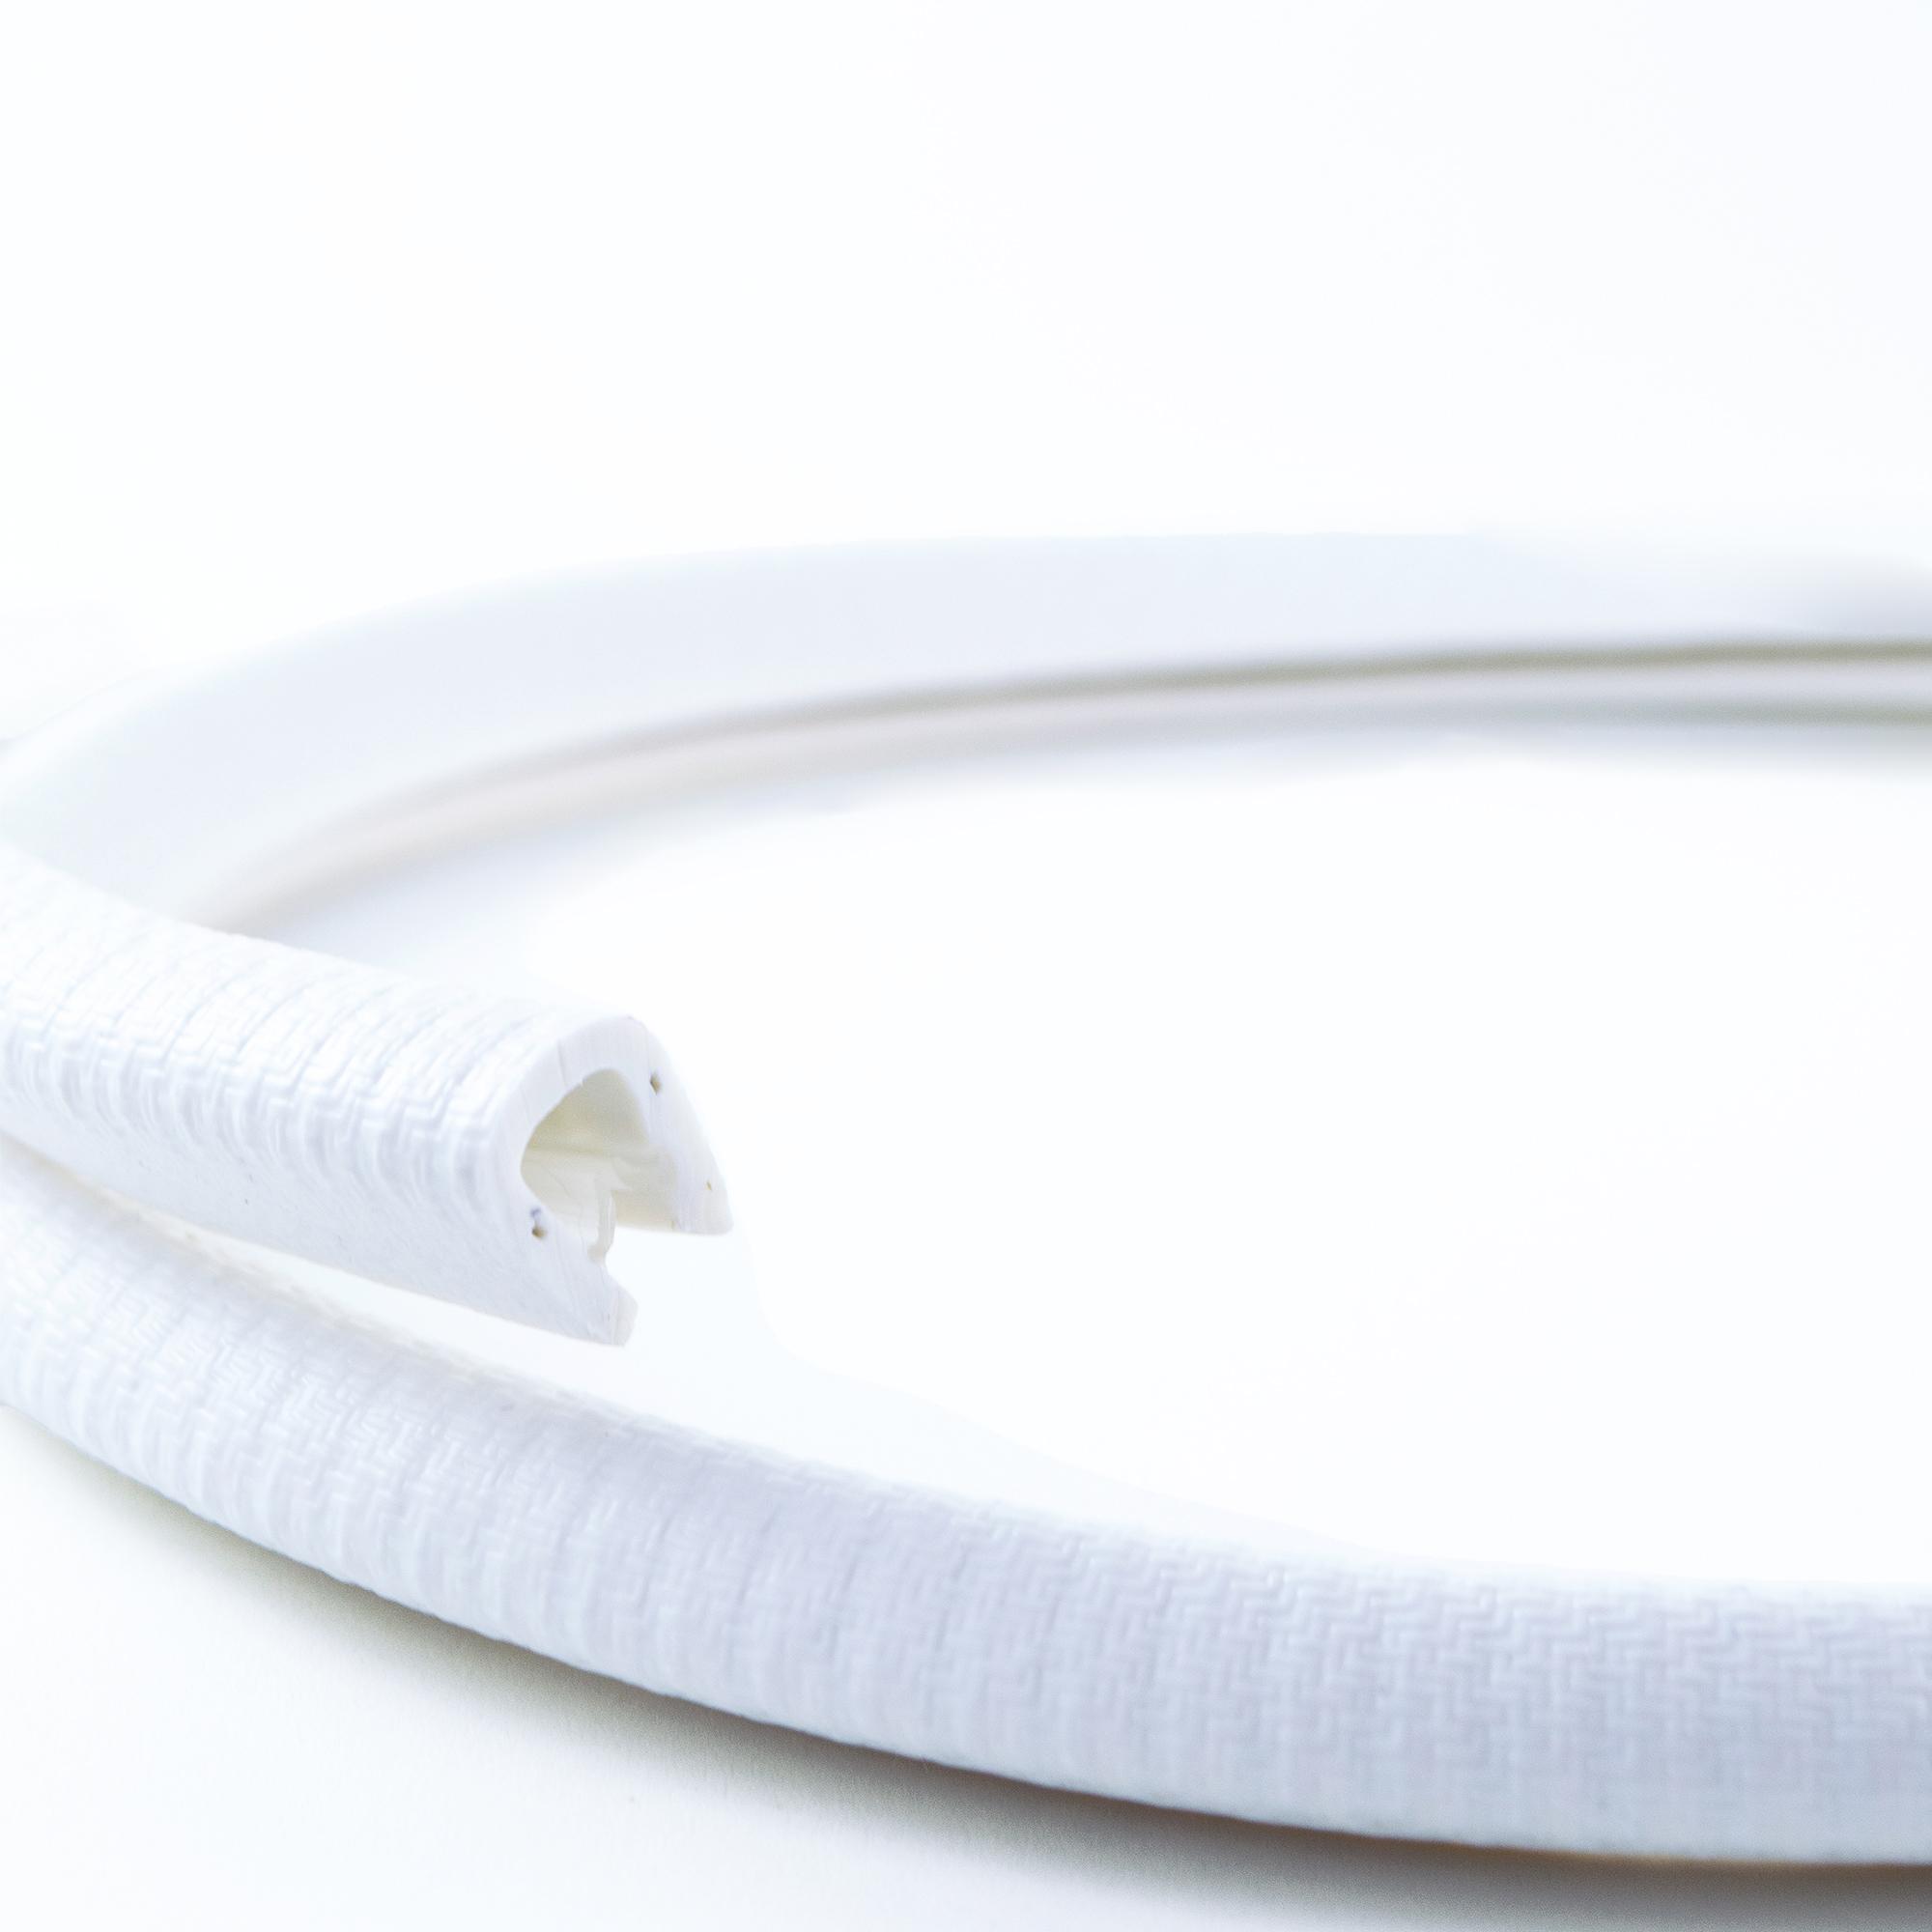 Edge protection profile 1 - 4.5 mm / PVC / white